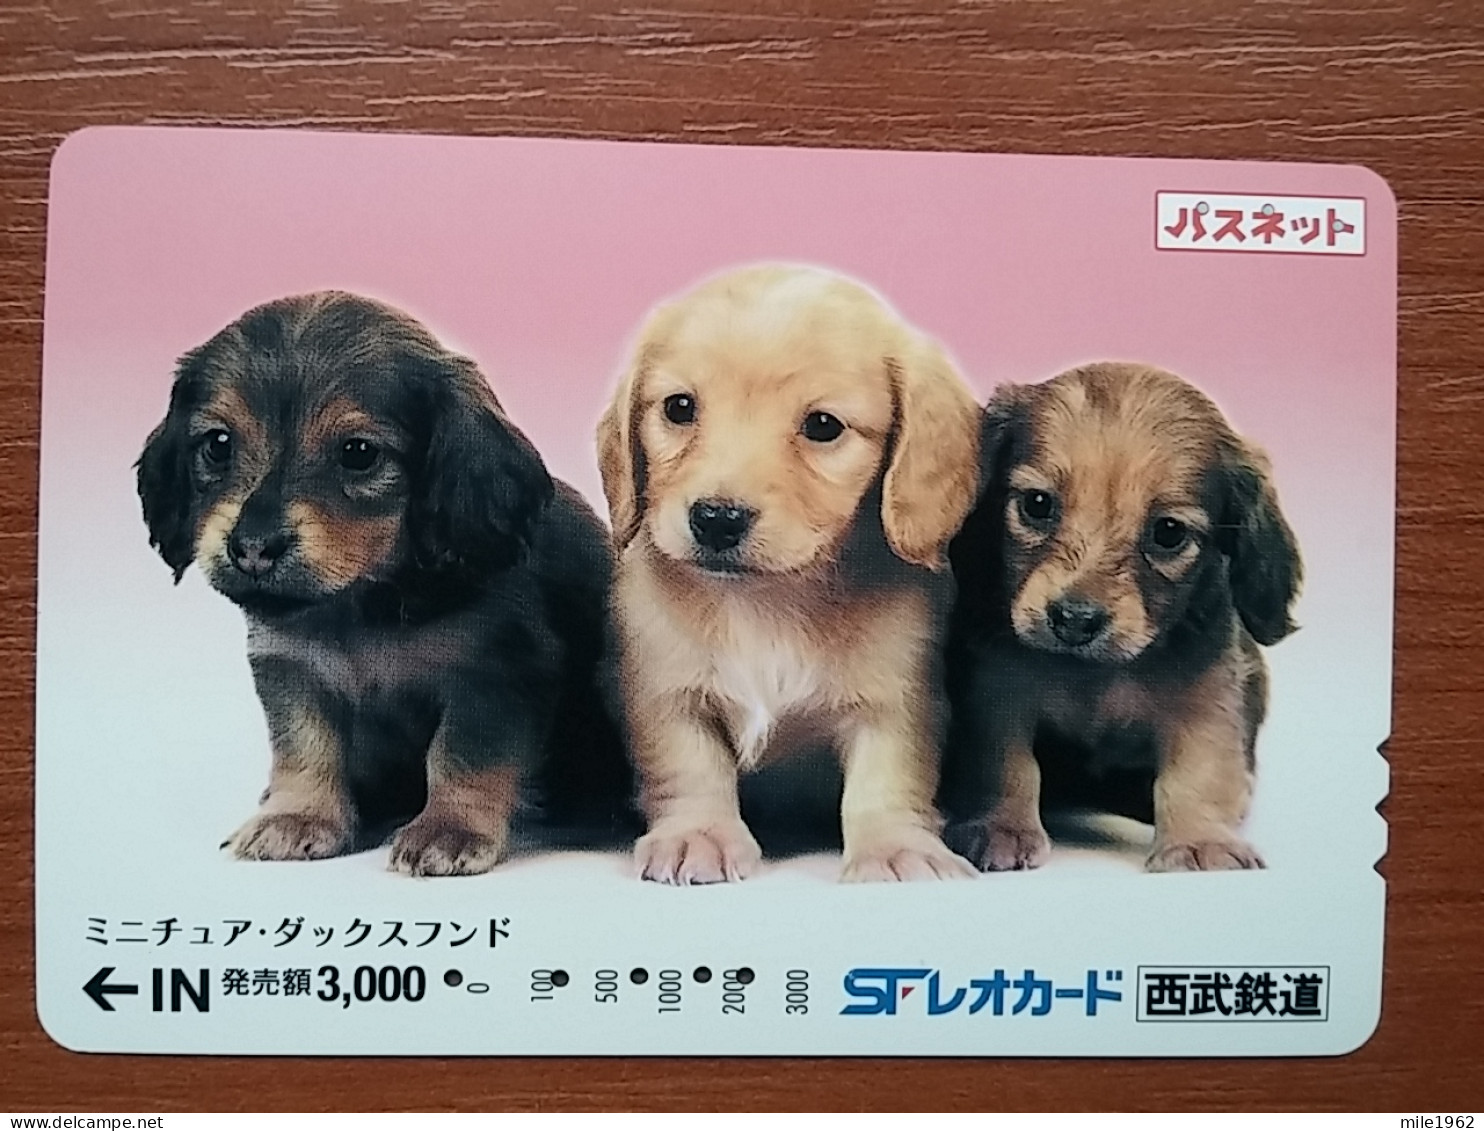 T-399 - JAPAN, Japon, Nipon, Carte Prepayee, Prepaid Card, Dog, Chien - Dogs